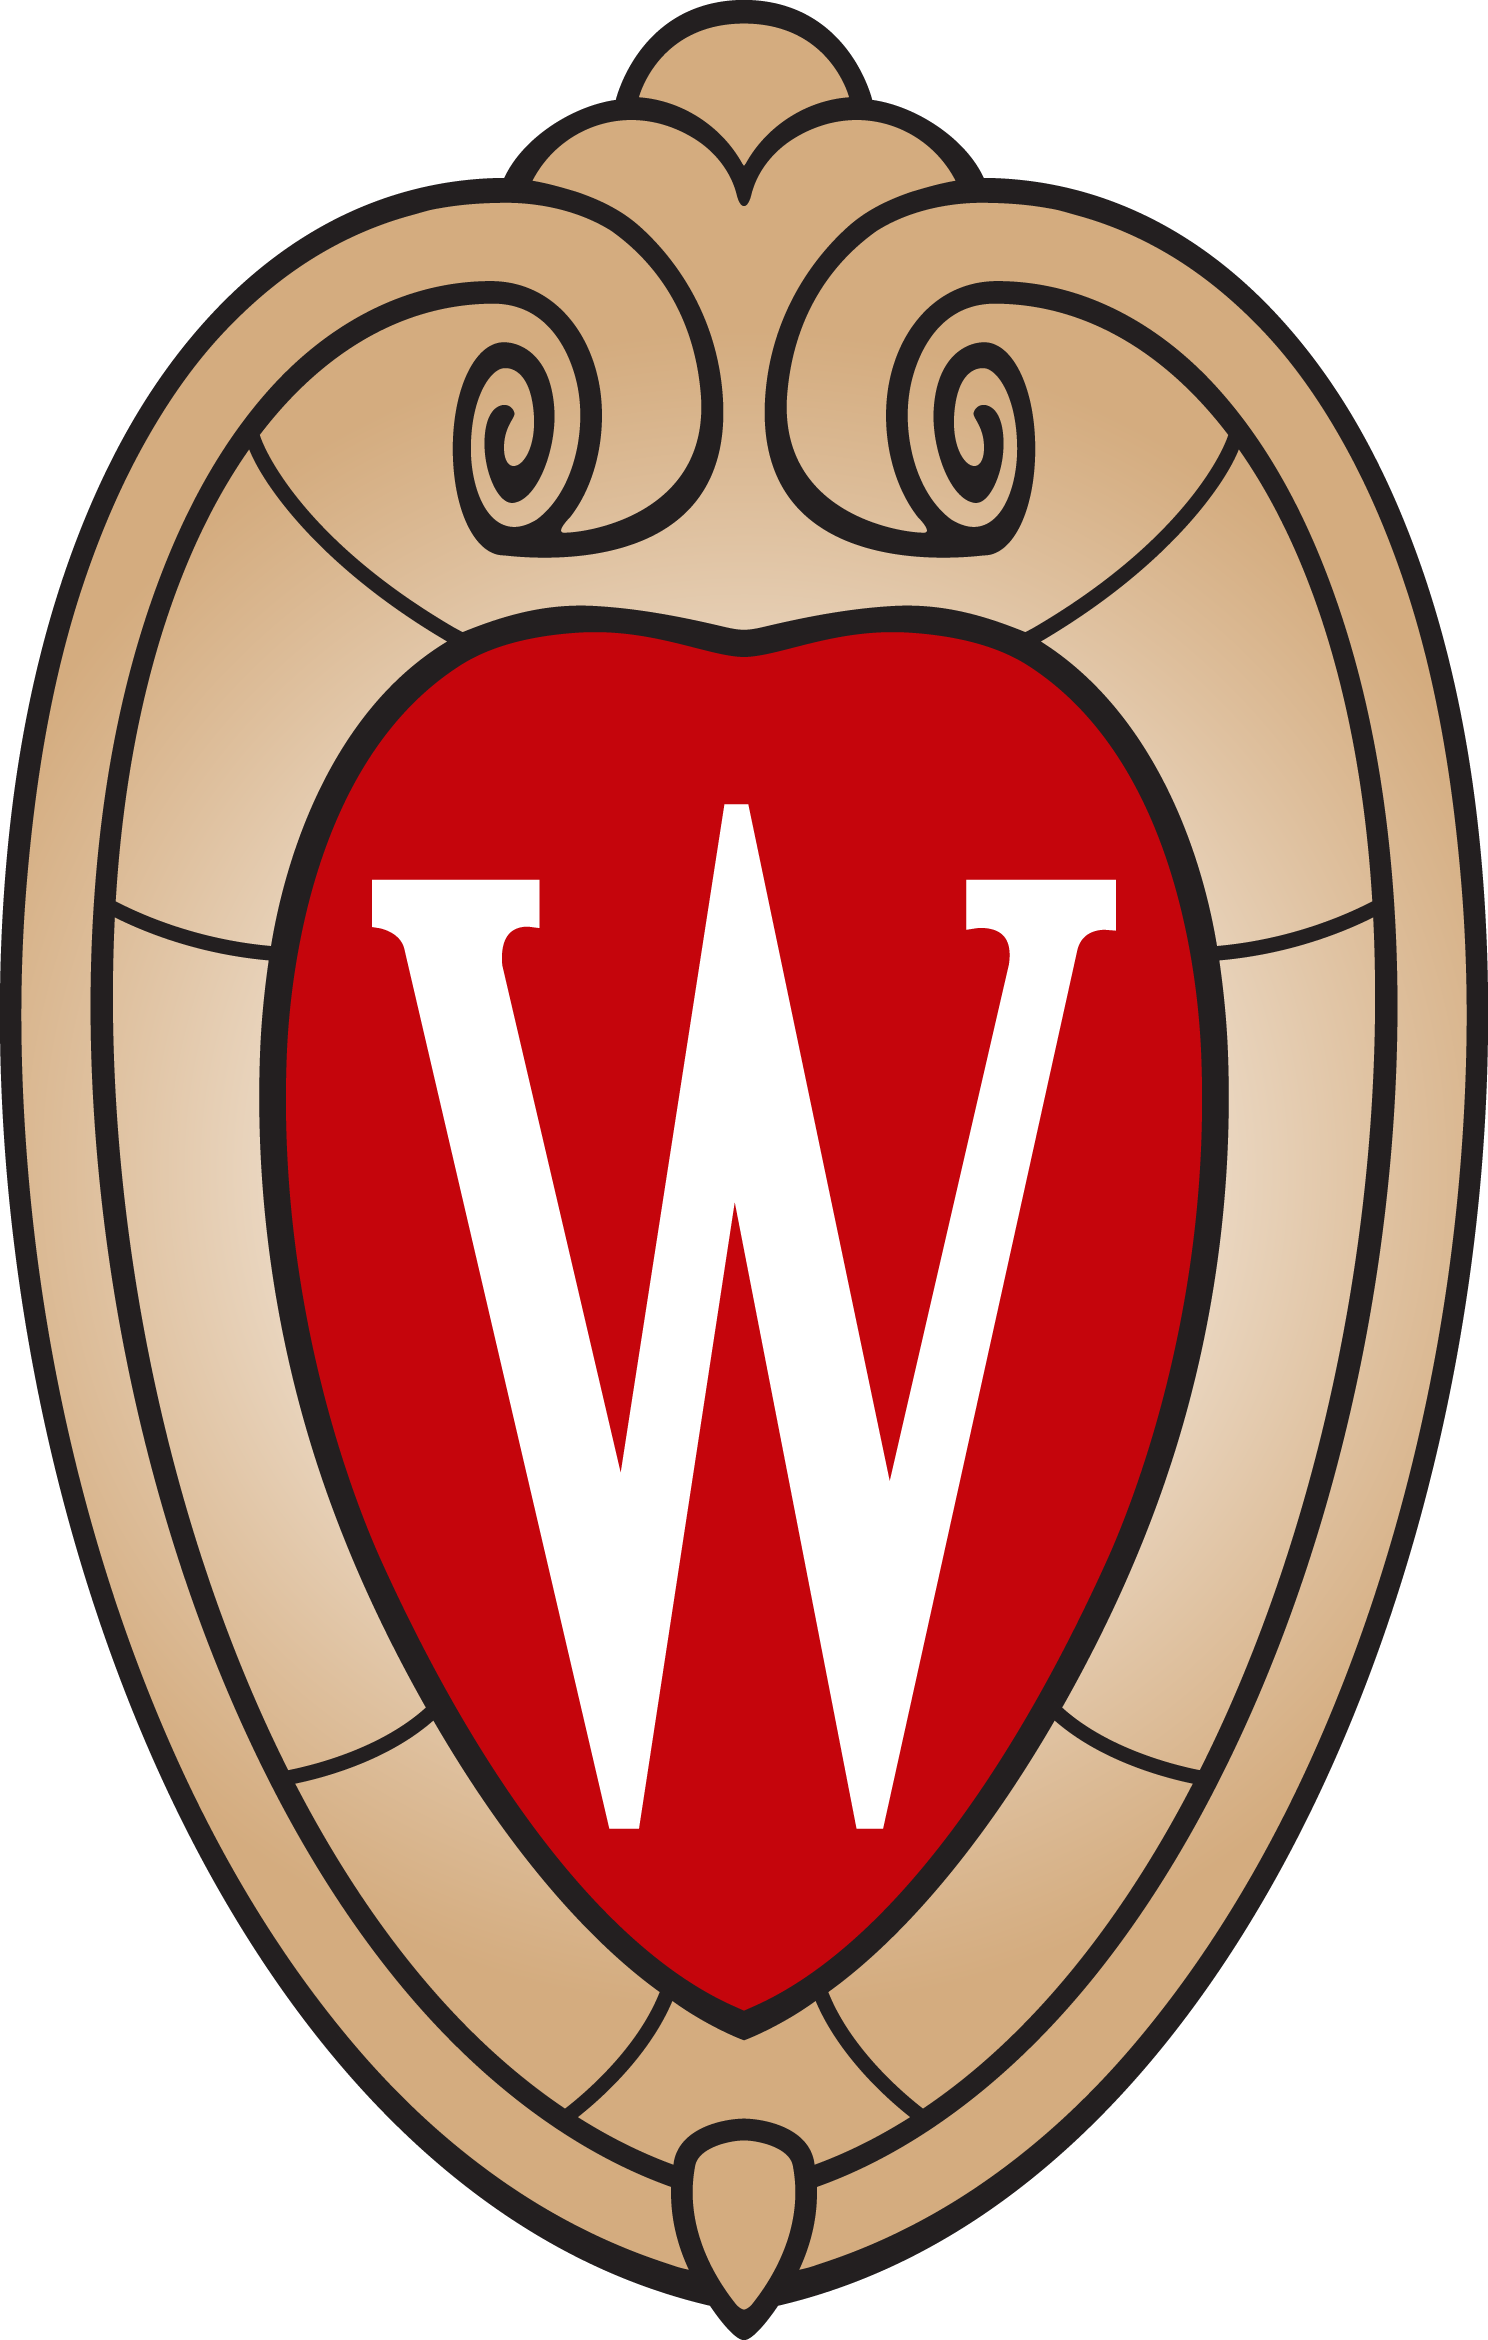 UW - University of Wisconsin-Madison - Университет Висконсина-Мэдисона - Висконсинский университет в Мадисоне